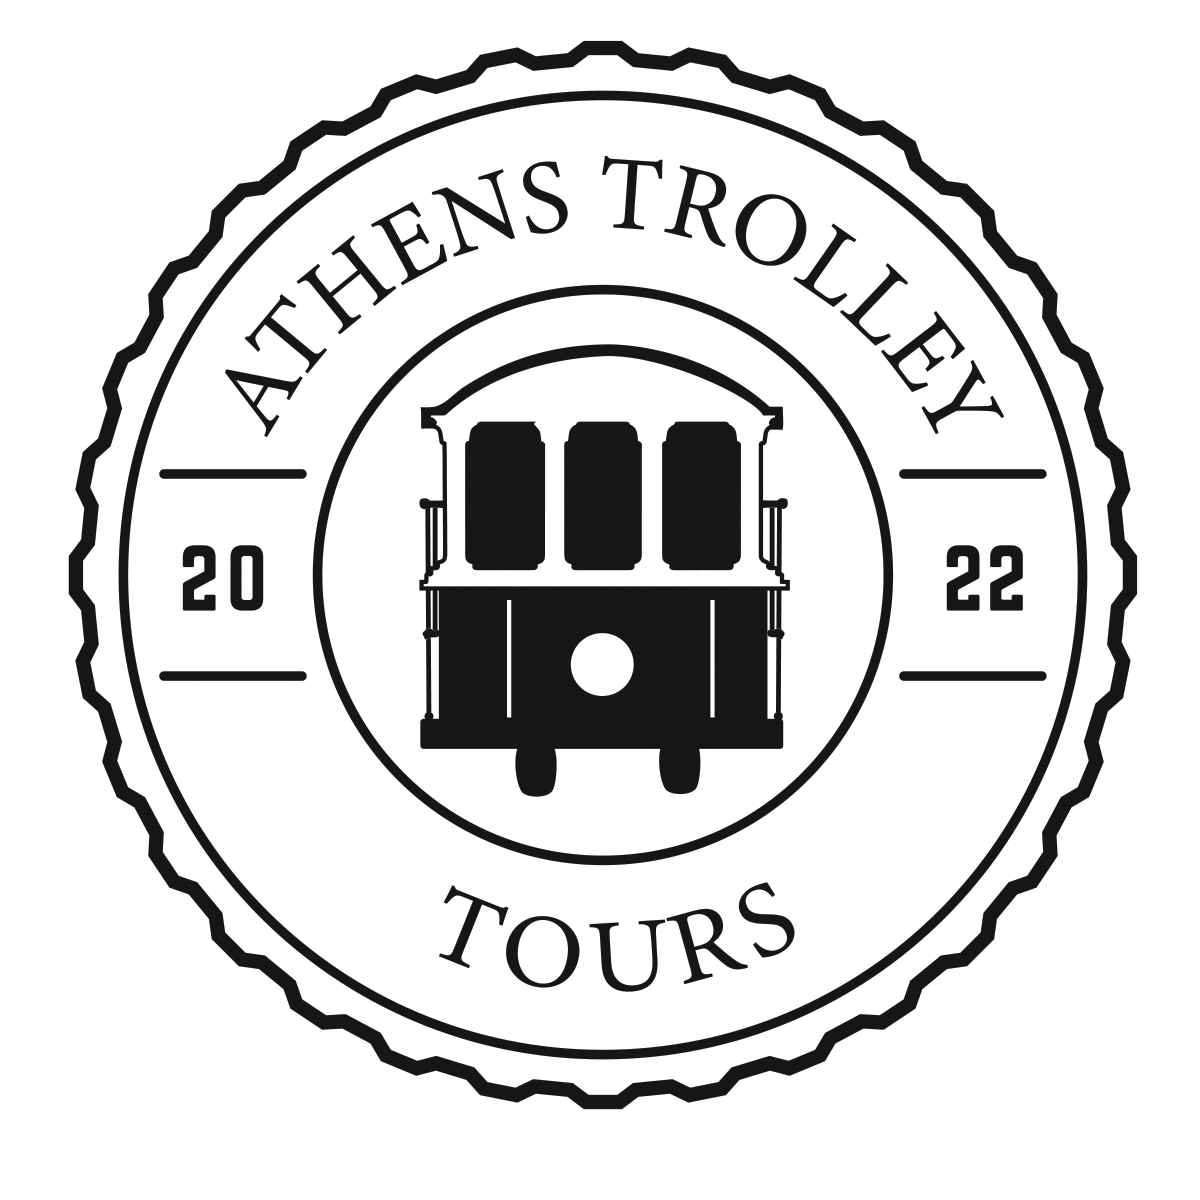 Athens Trolley Tours